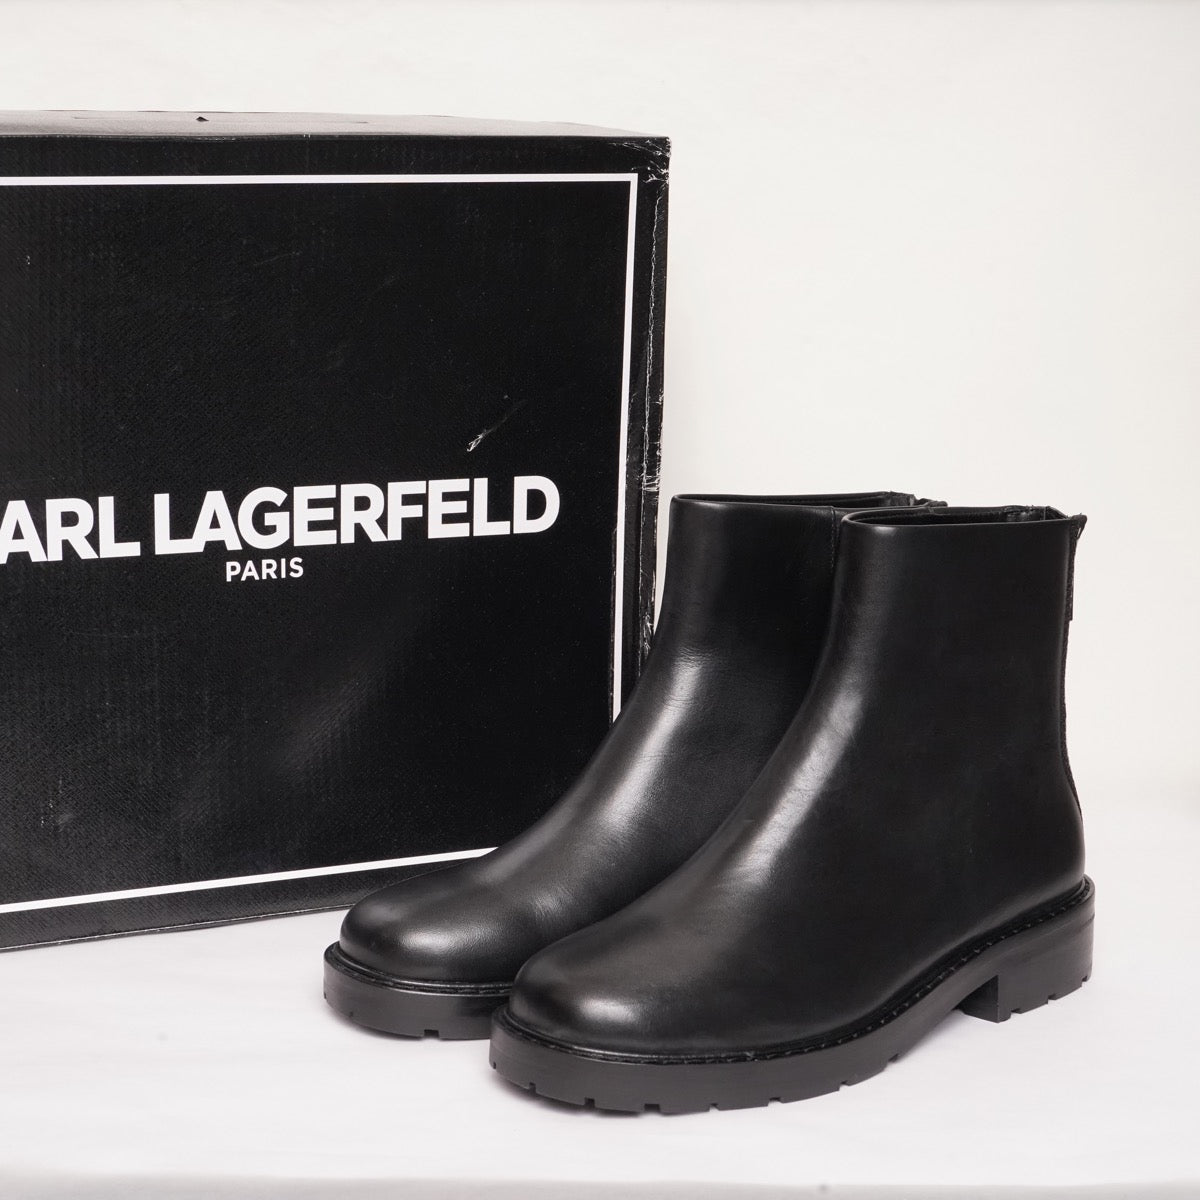 KARL LAGERFELD PARIS カールラガーフェルド ブラック バックジップ ロゴ ブーティ ショートブーツ BLACK BACK-ZIP LOGO BOOTIE WOMEN